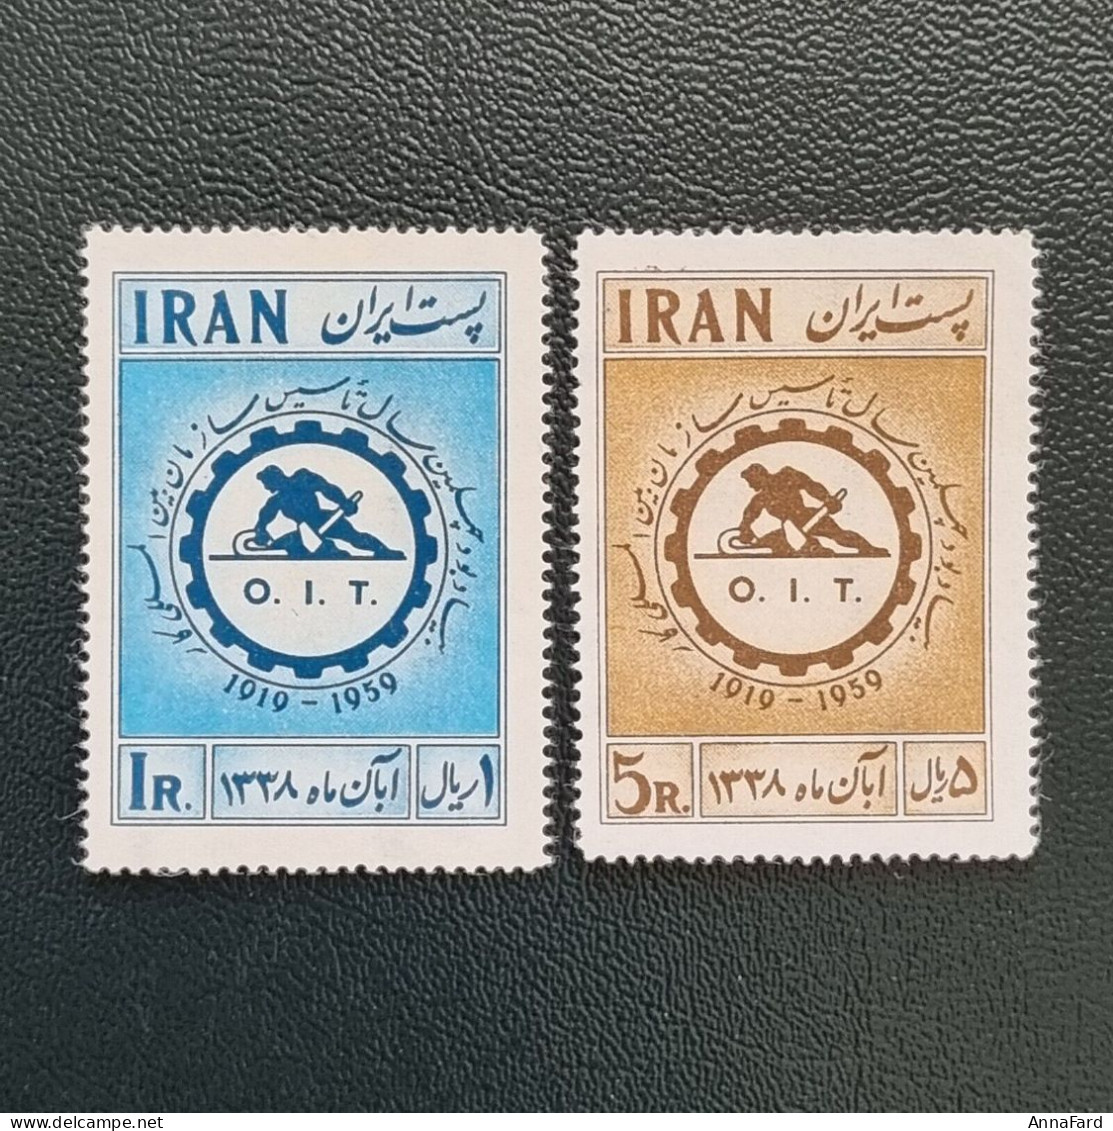 Iran Persia 40th Labour Organization 1959 MNH Singles Scott 1136-1137 - Iran